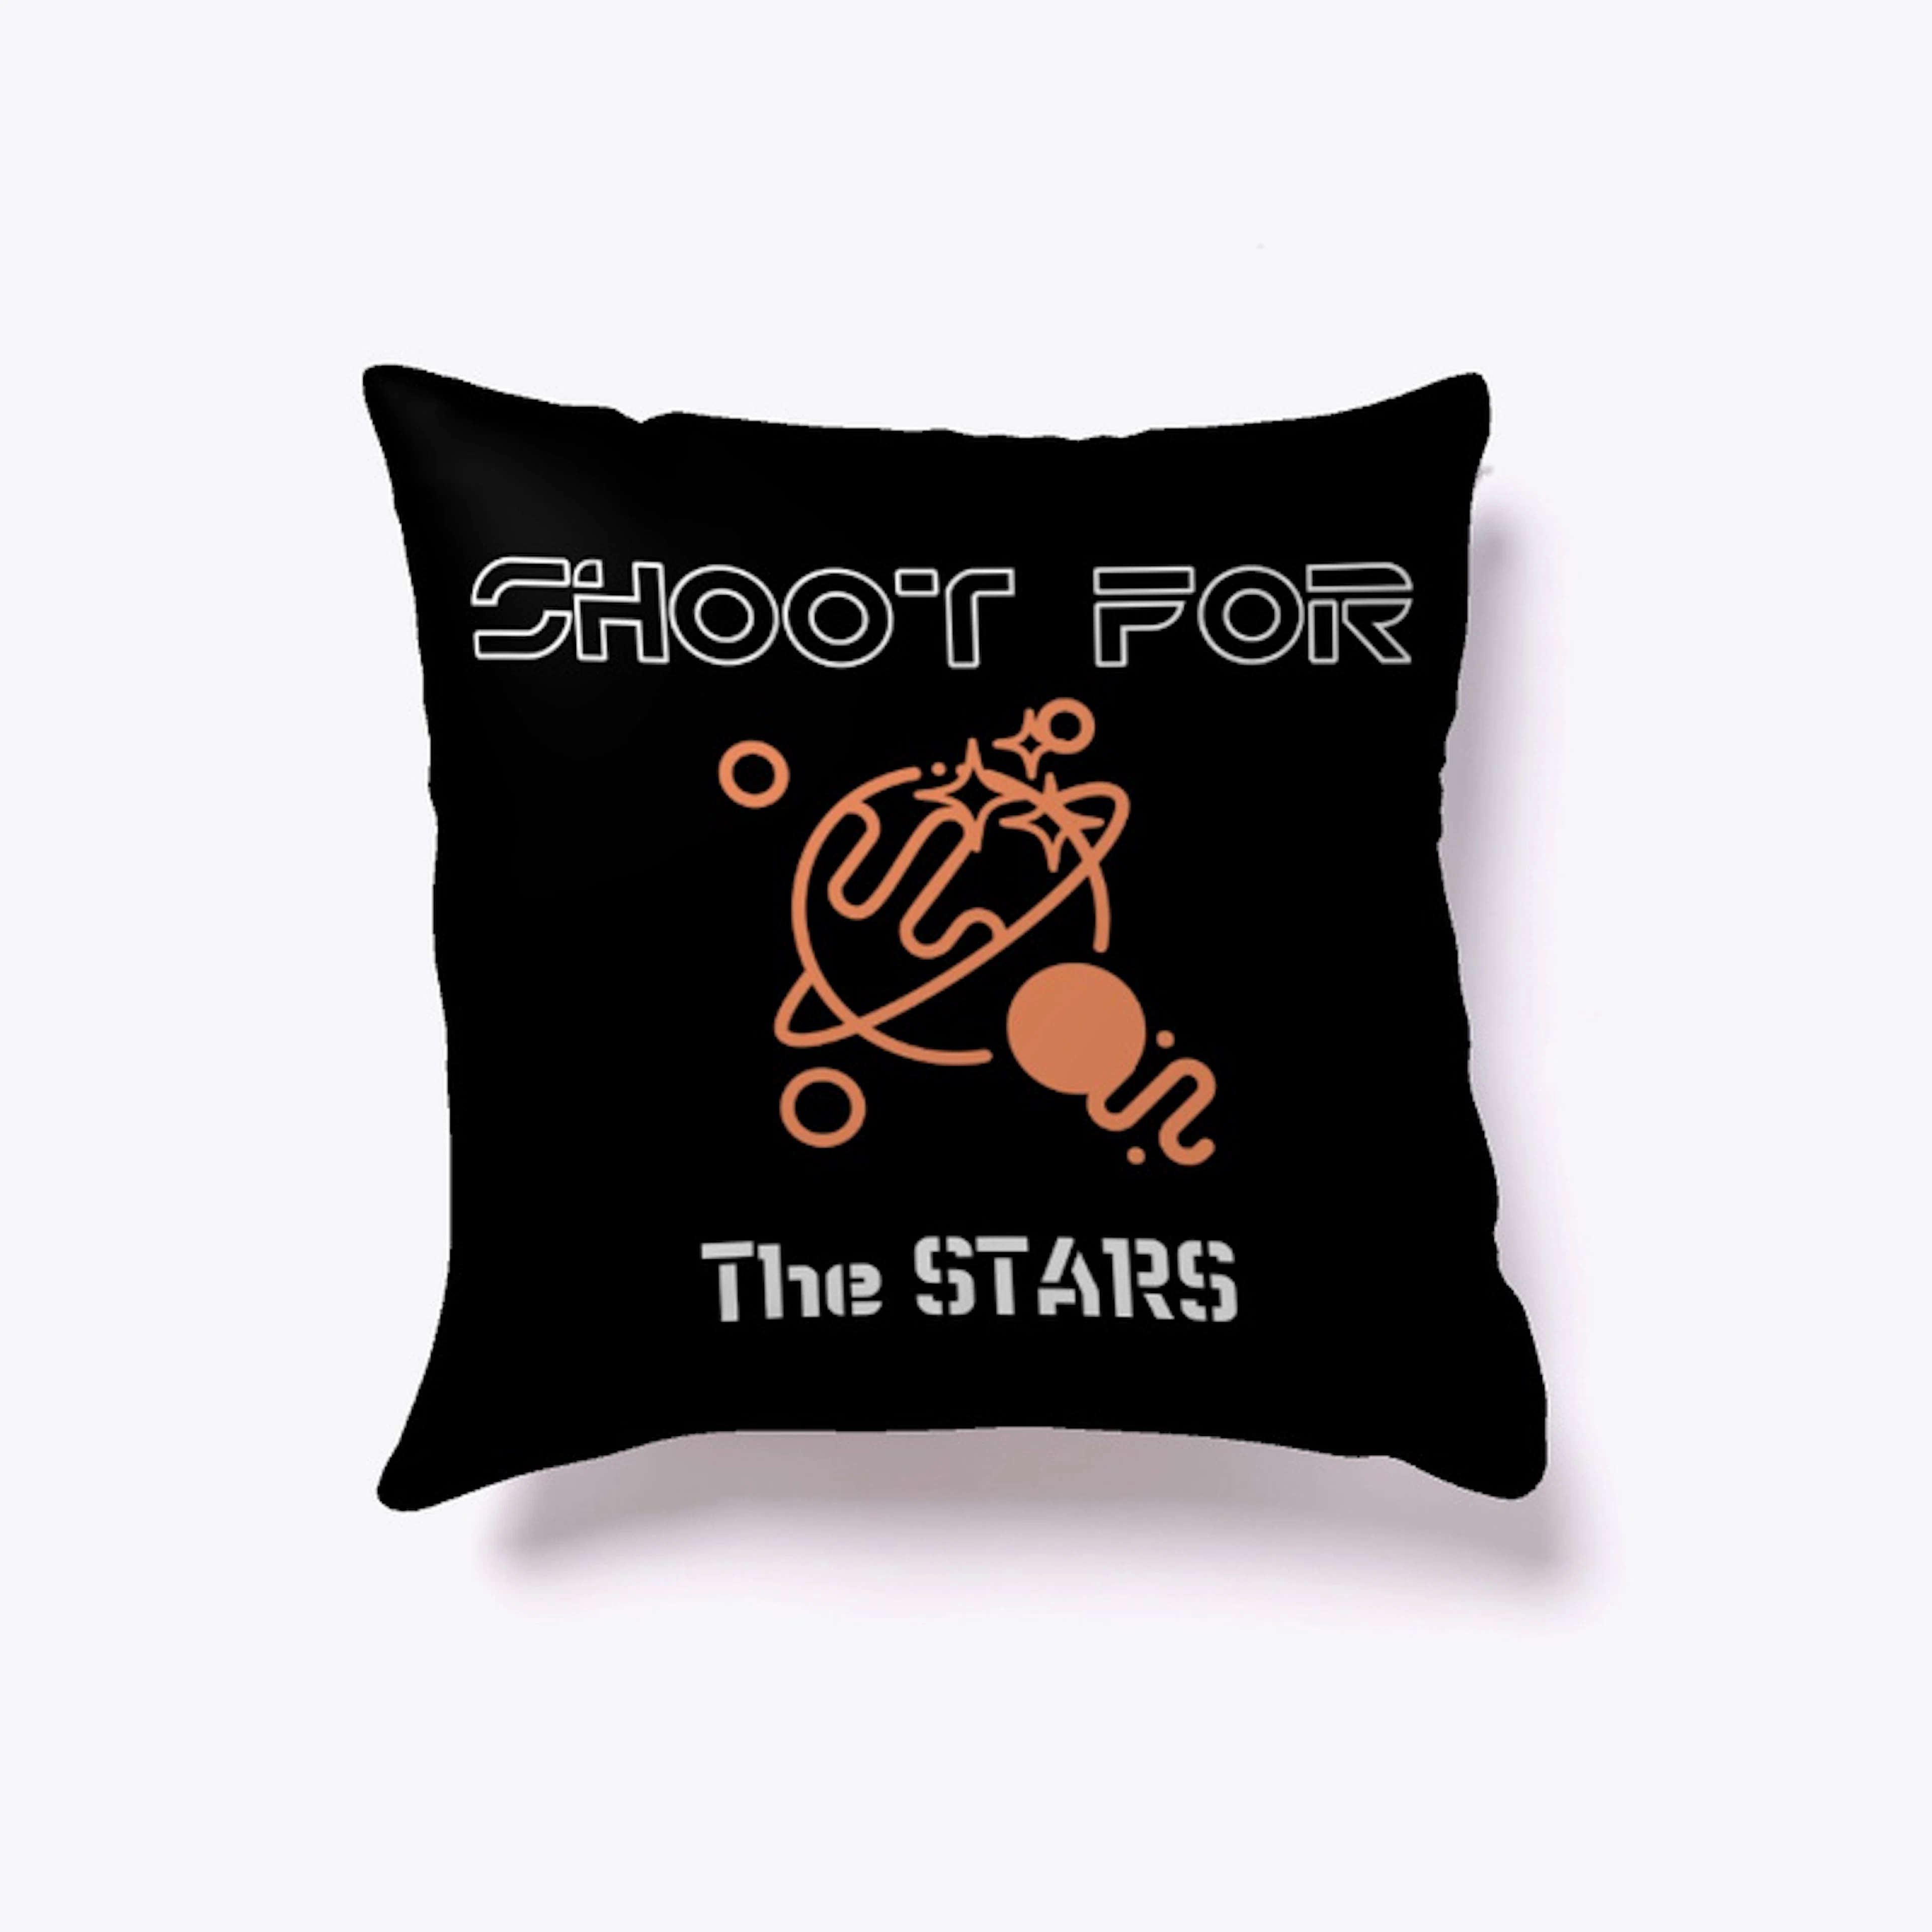 Shoot for the Stars Pillow